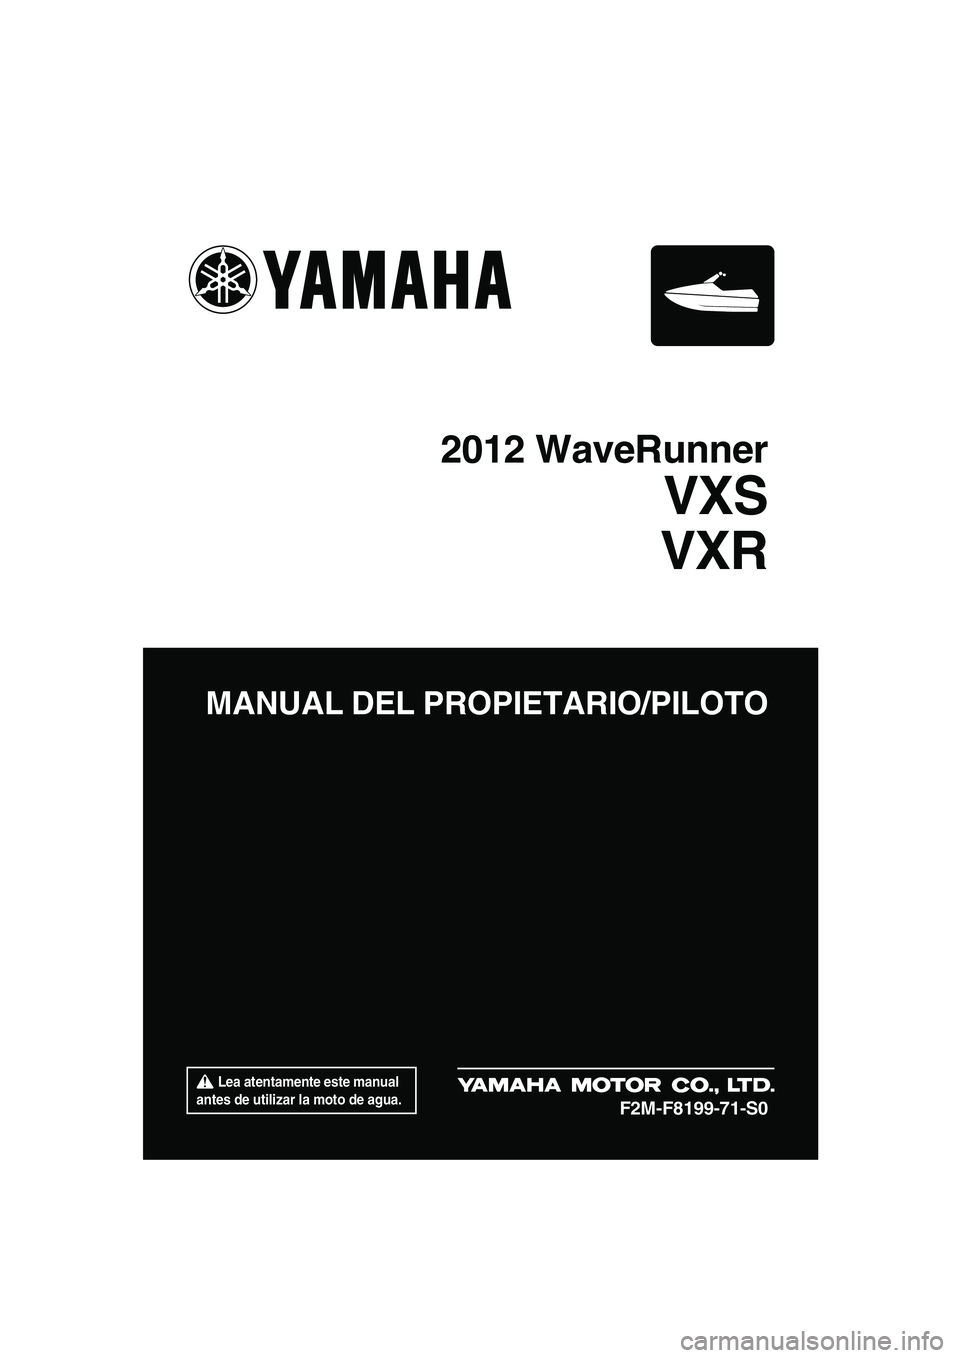 YAMAHA VXS 2012  Manuale de Empleo (in Spanish) 